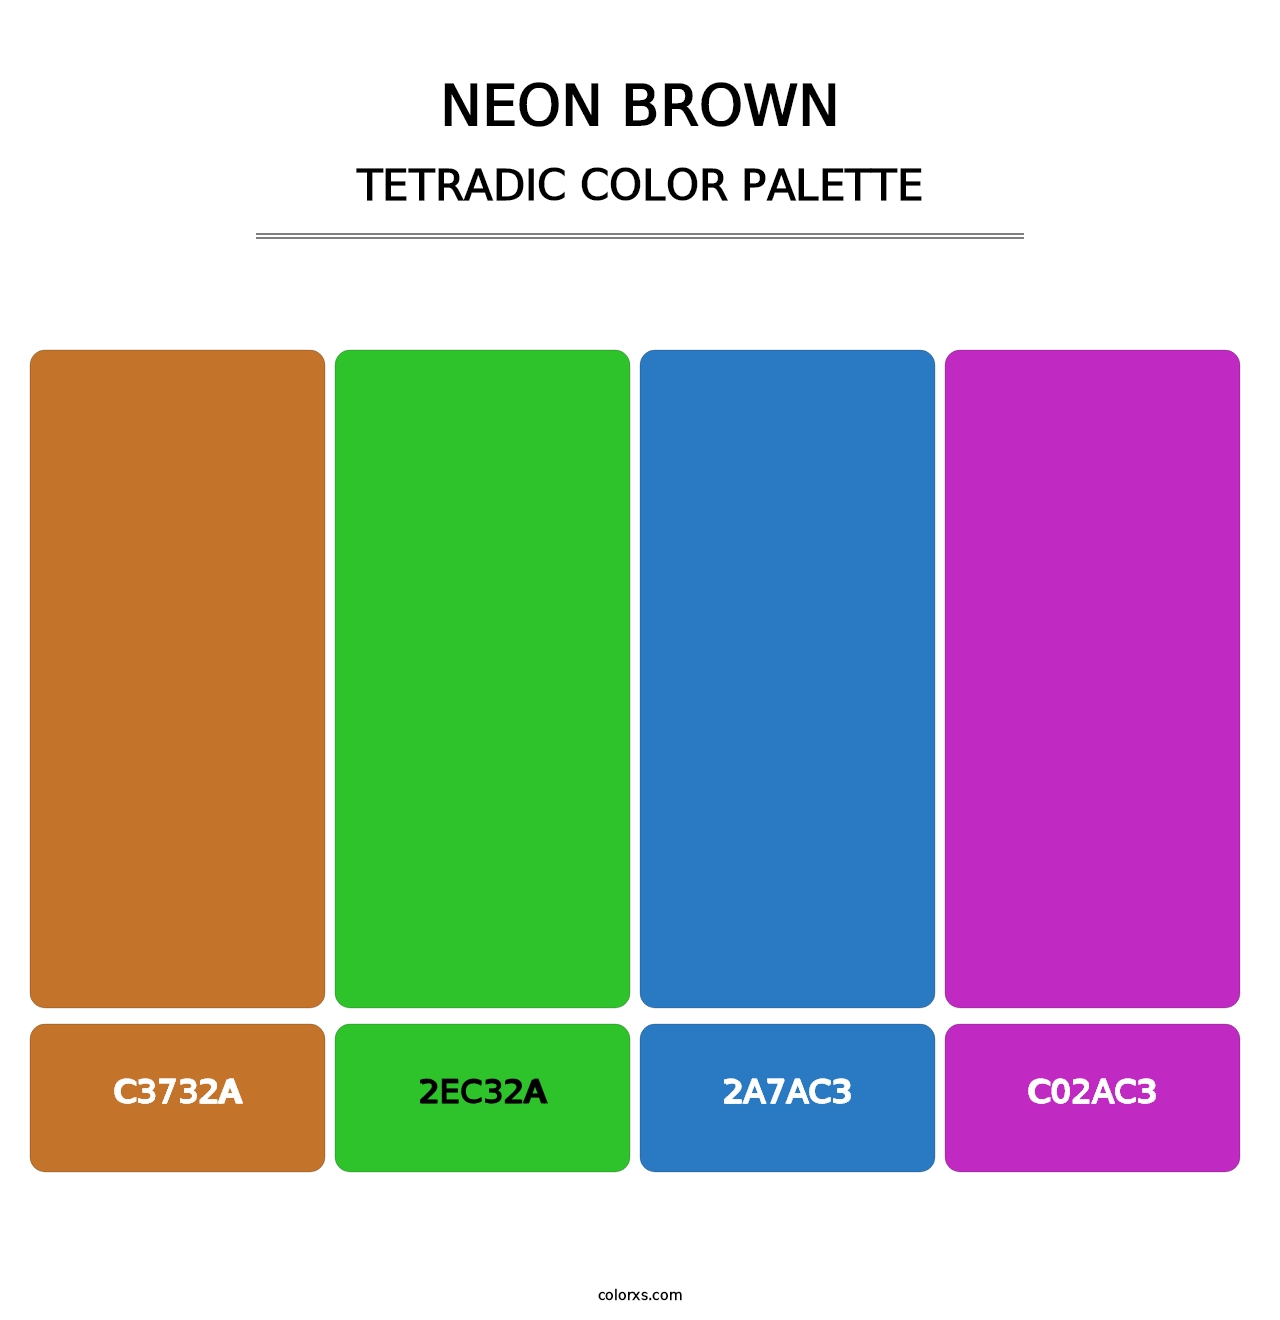 Neon Brown - Tetradic Color Palette